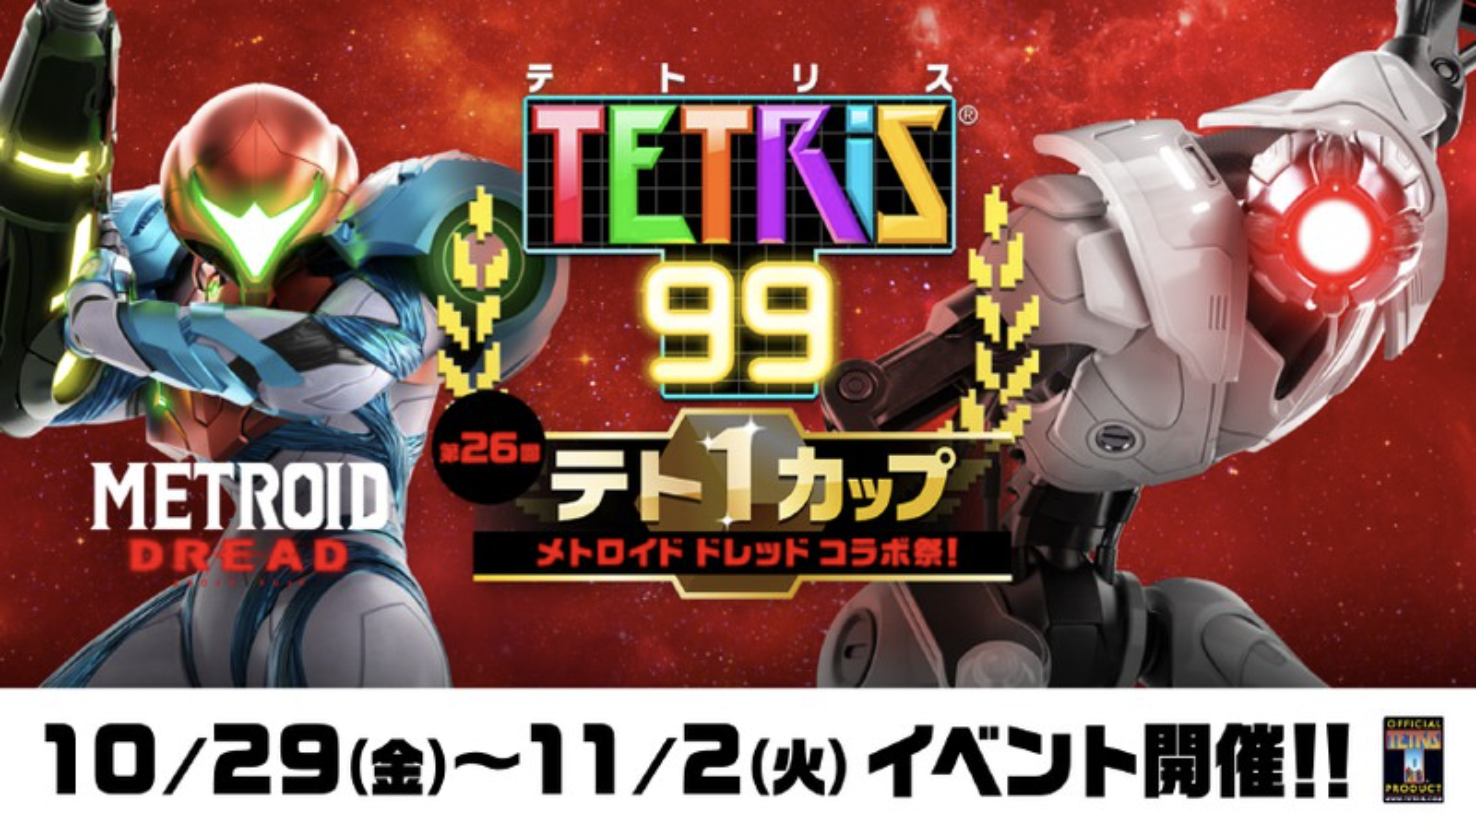 Metroid Dread Tetris 99 Event Starting Friday